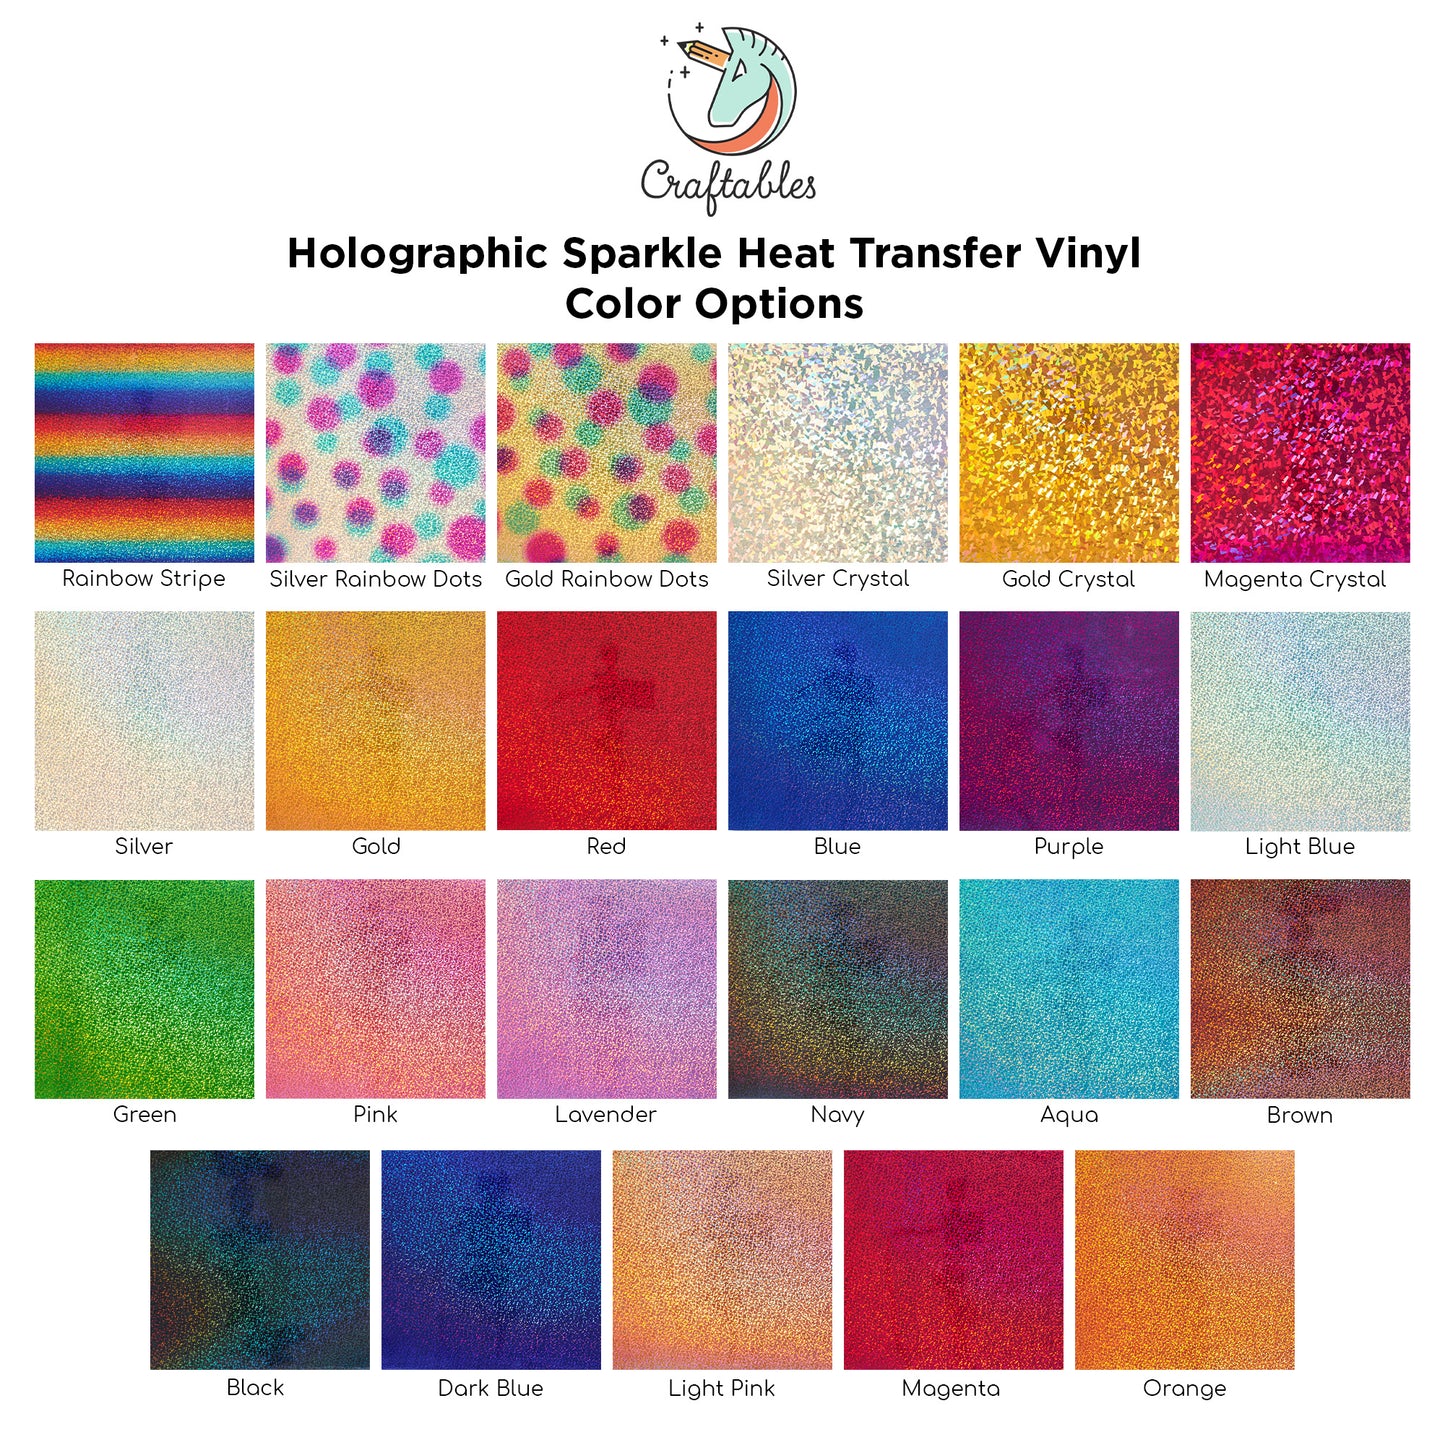 Orange Holographic Sparkle Heat Transfer Vinyl Rolls By Craftables